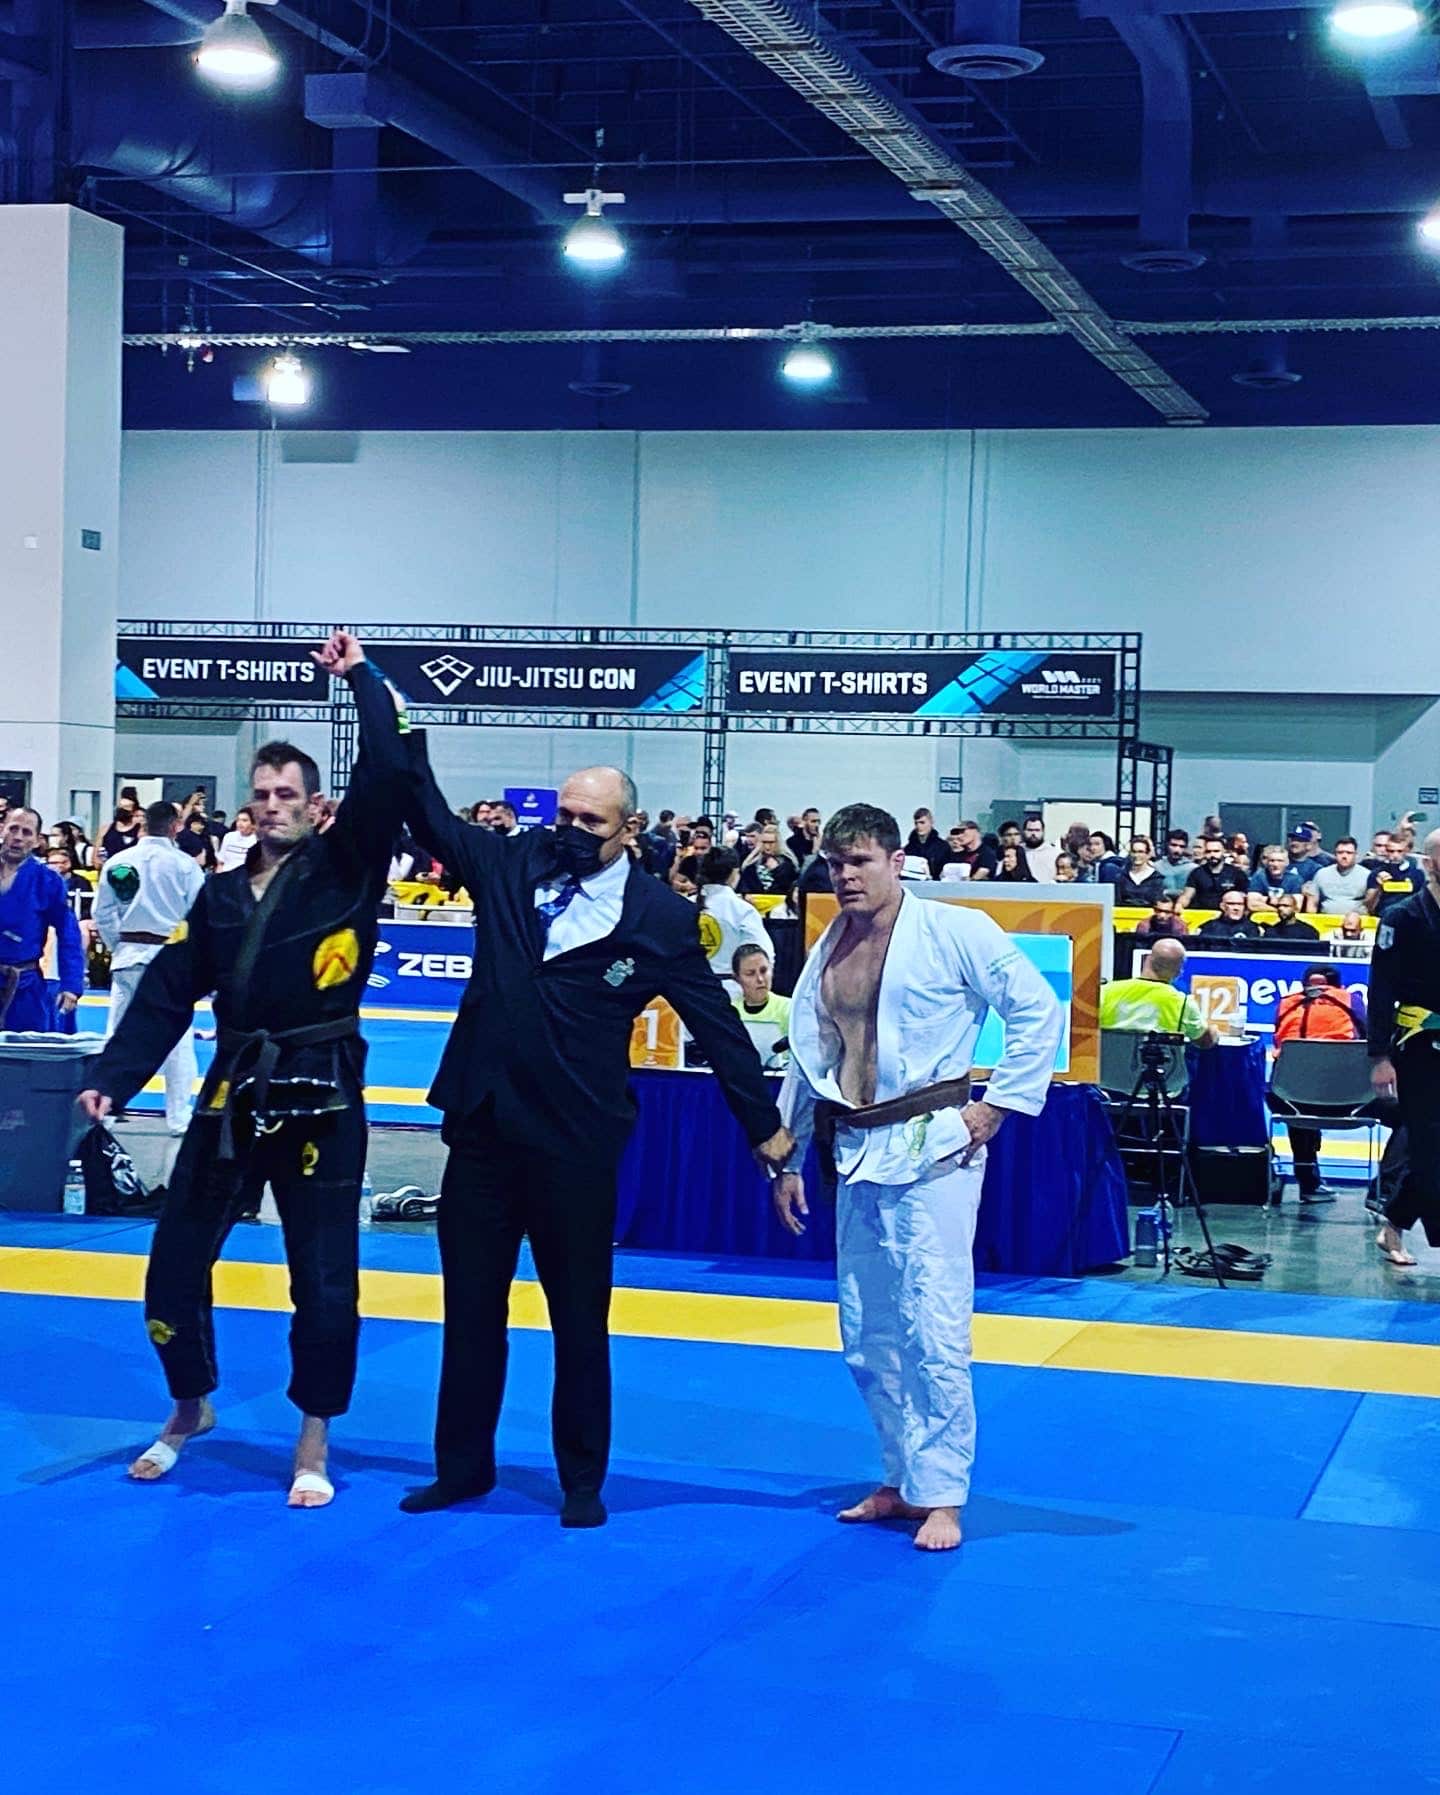 World Master IBJJF Jiu-Jitsu Championship 2019 News– LEaO OPTiCS